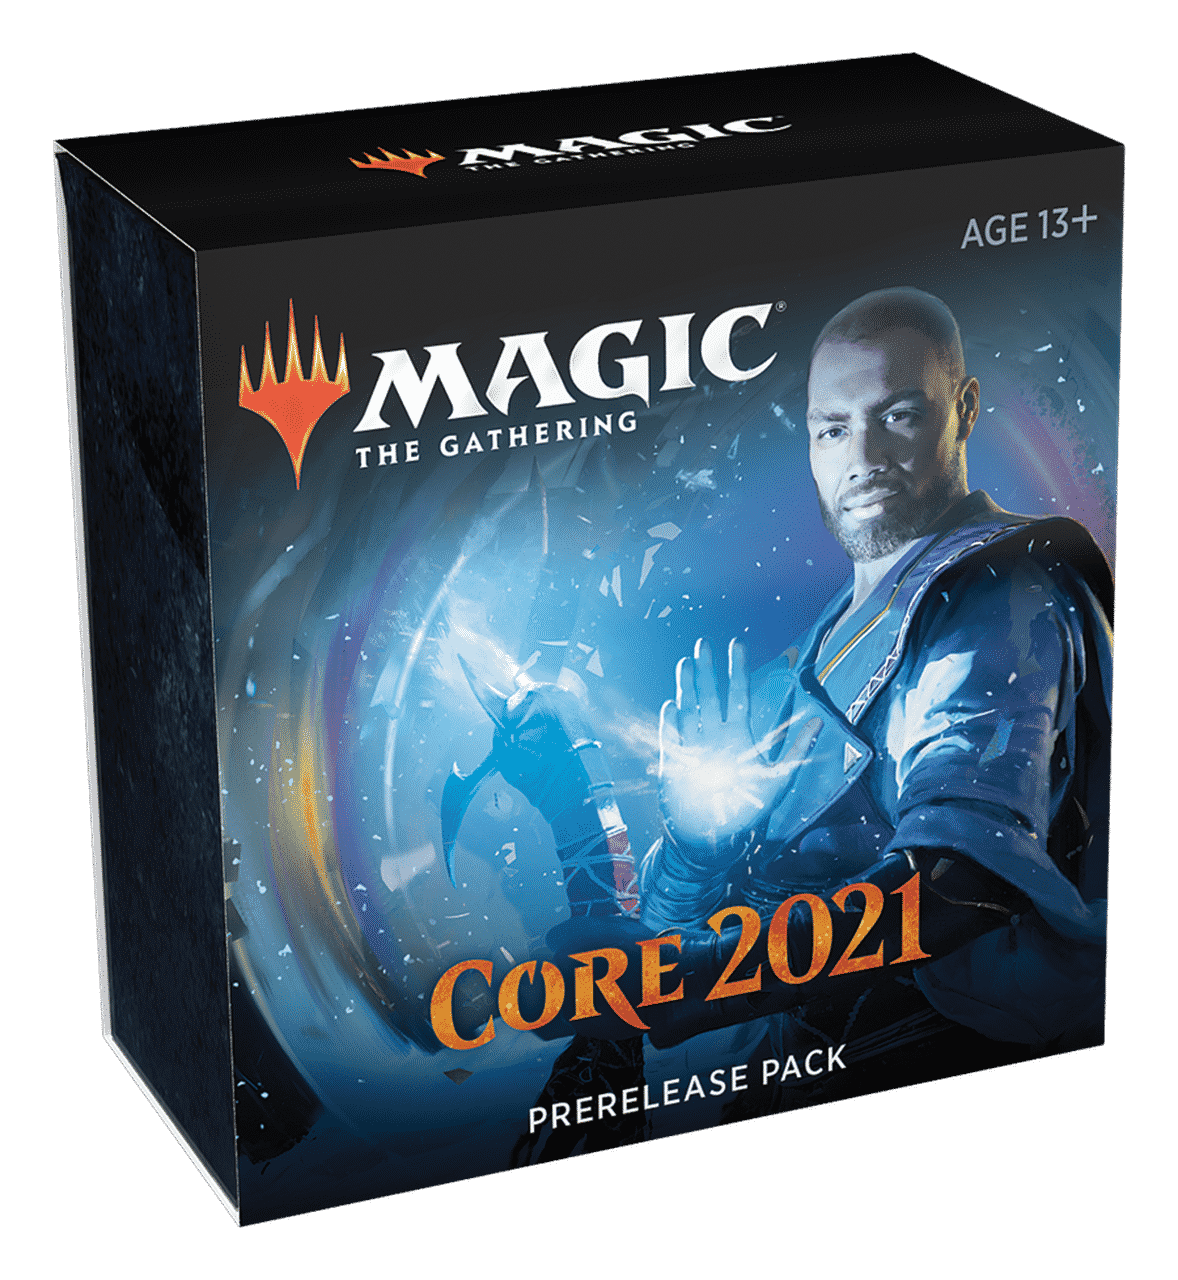 Prerelease Pack: Core Set 2021 - Prerelease Pack